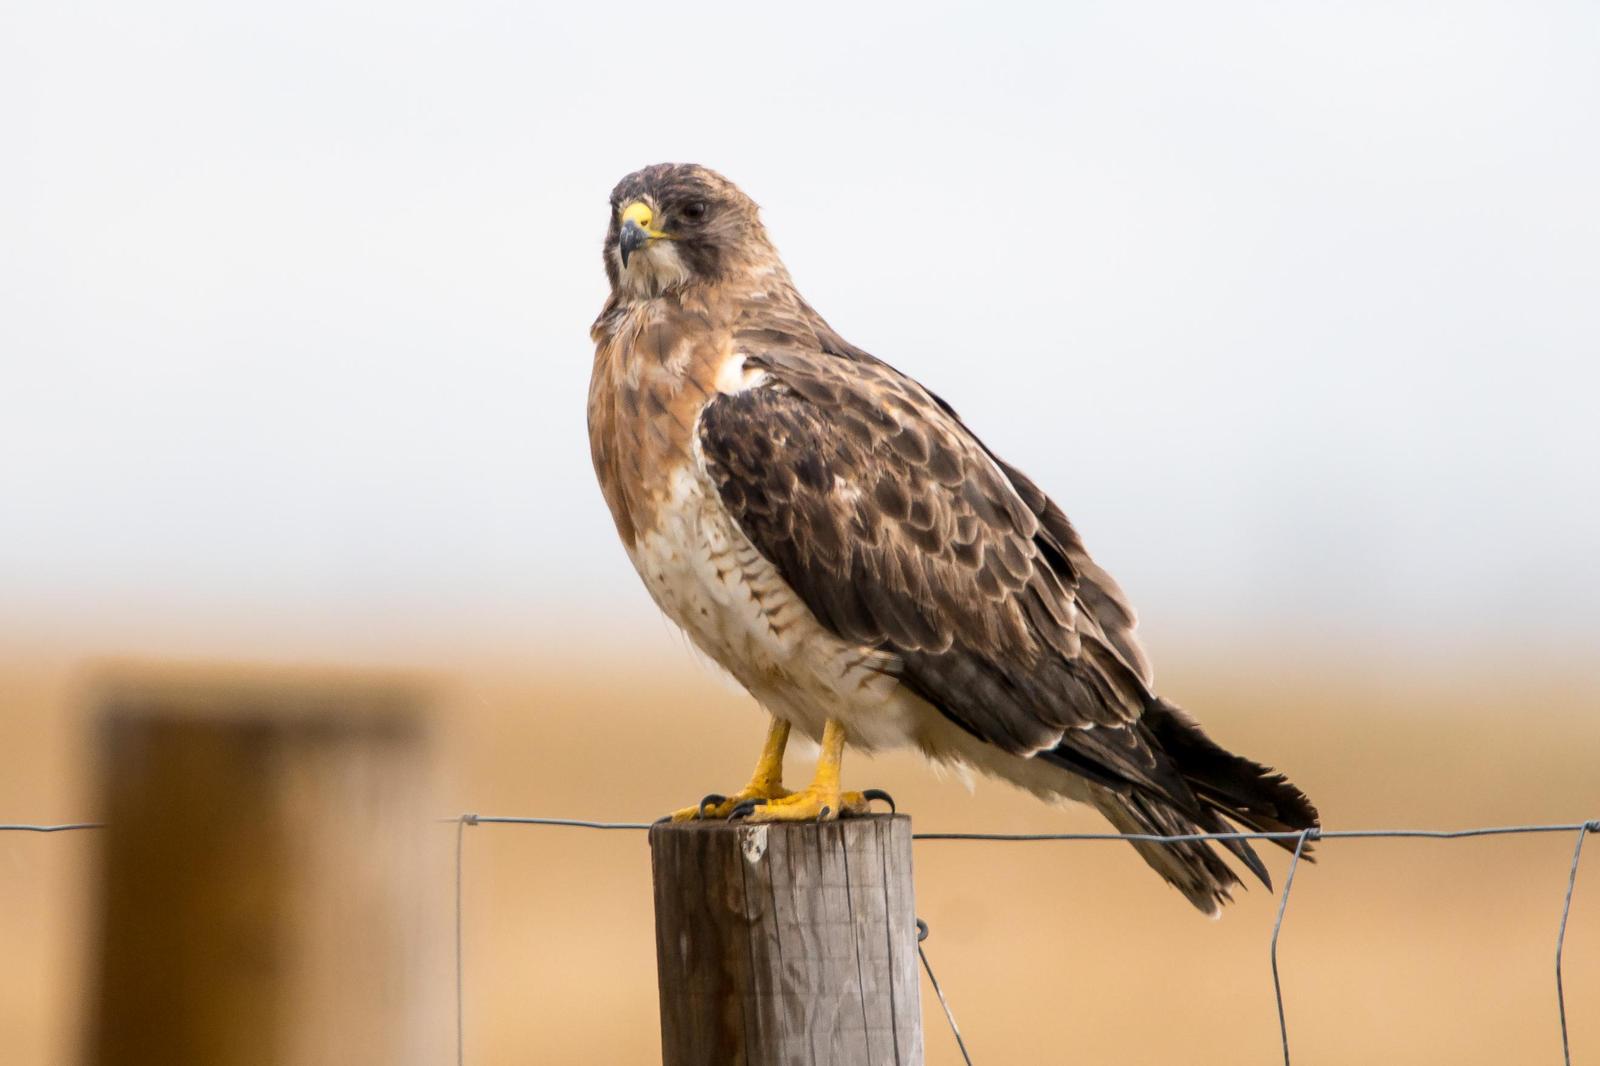 Swainson's Hawk Photo by Gerald Hoekstra